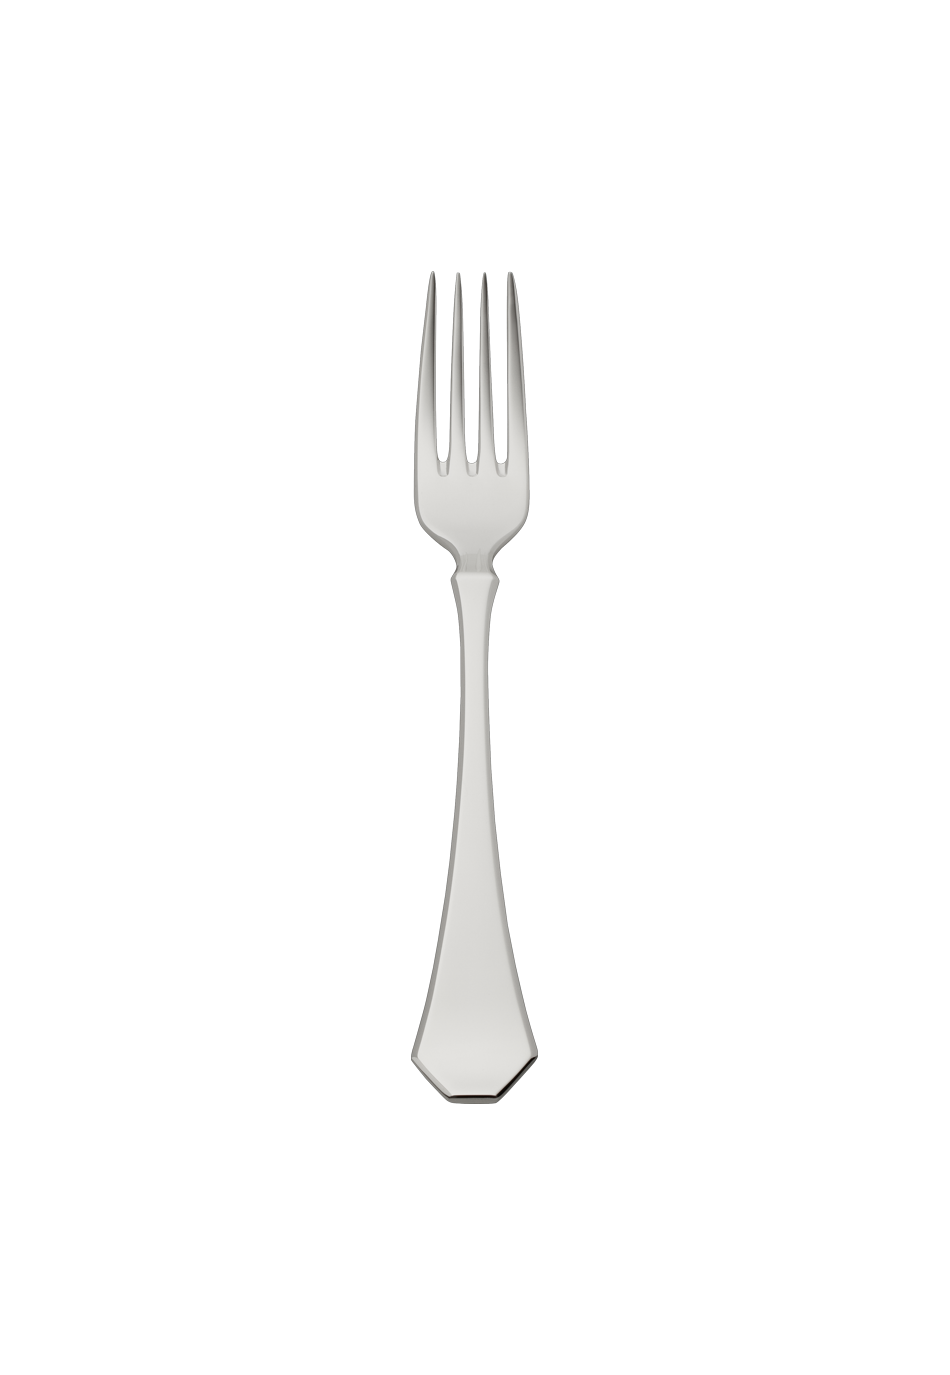 Baltic Dessert Fork (18/8 stainless steel)